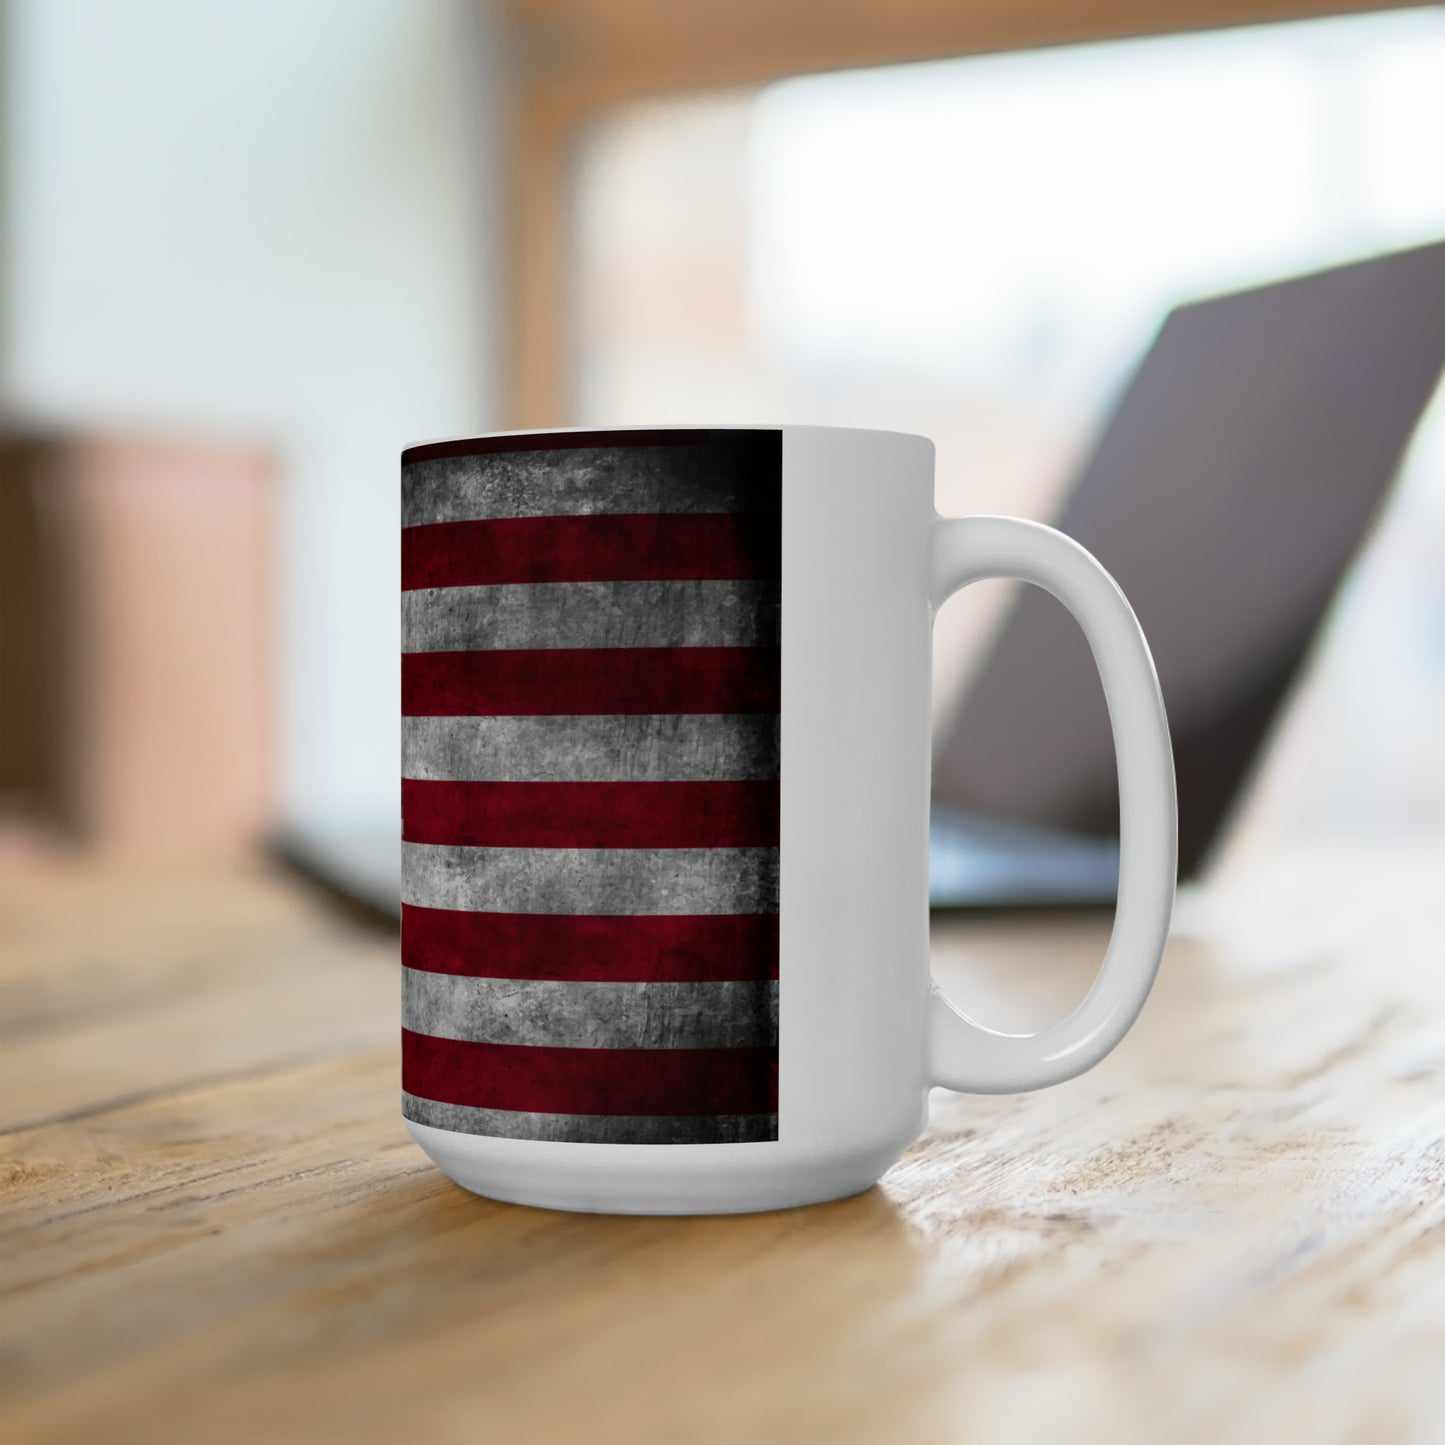 Captain Trump American Flag Jumbo Ceramic Coffee Mug 15oz